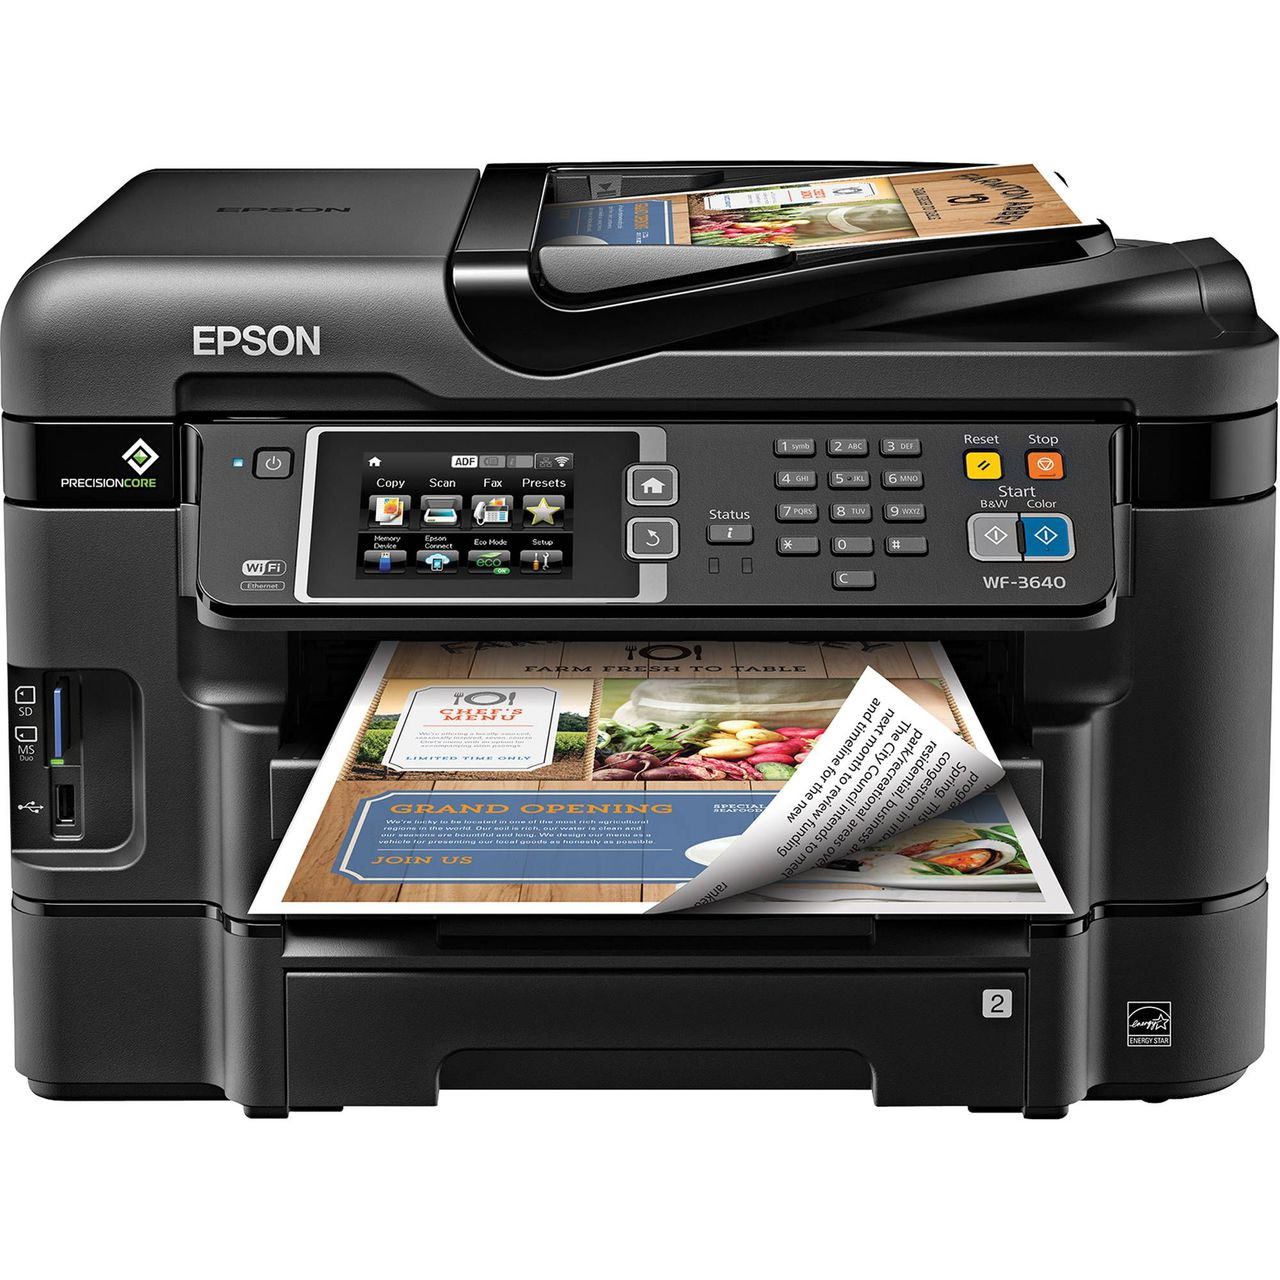 Epson Workforce 3640 Printer Troubleshooting 9952